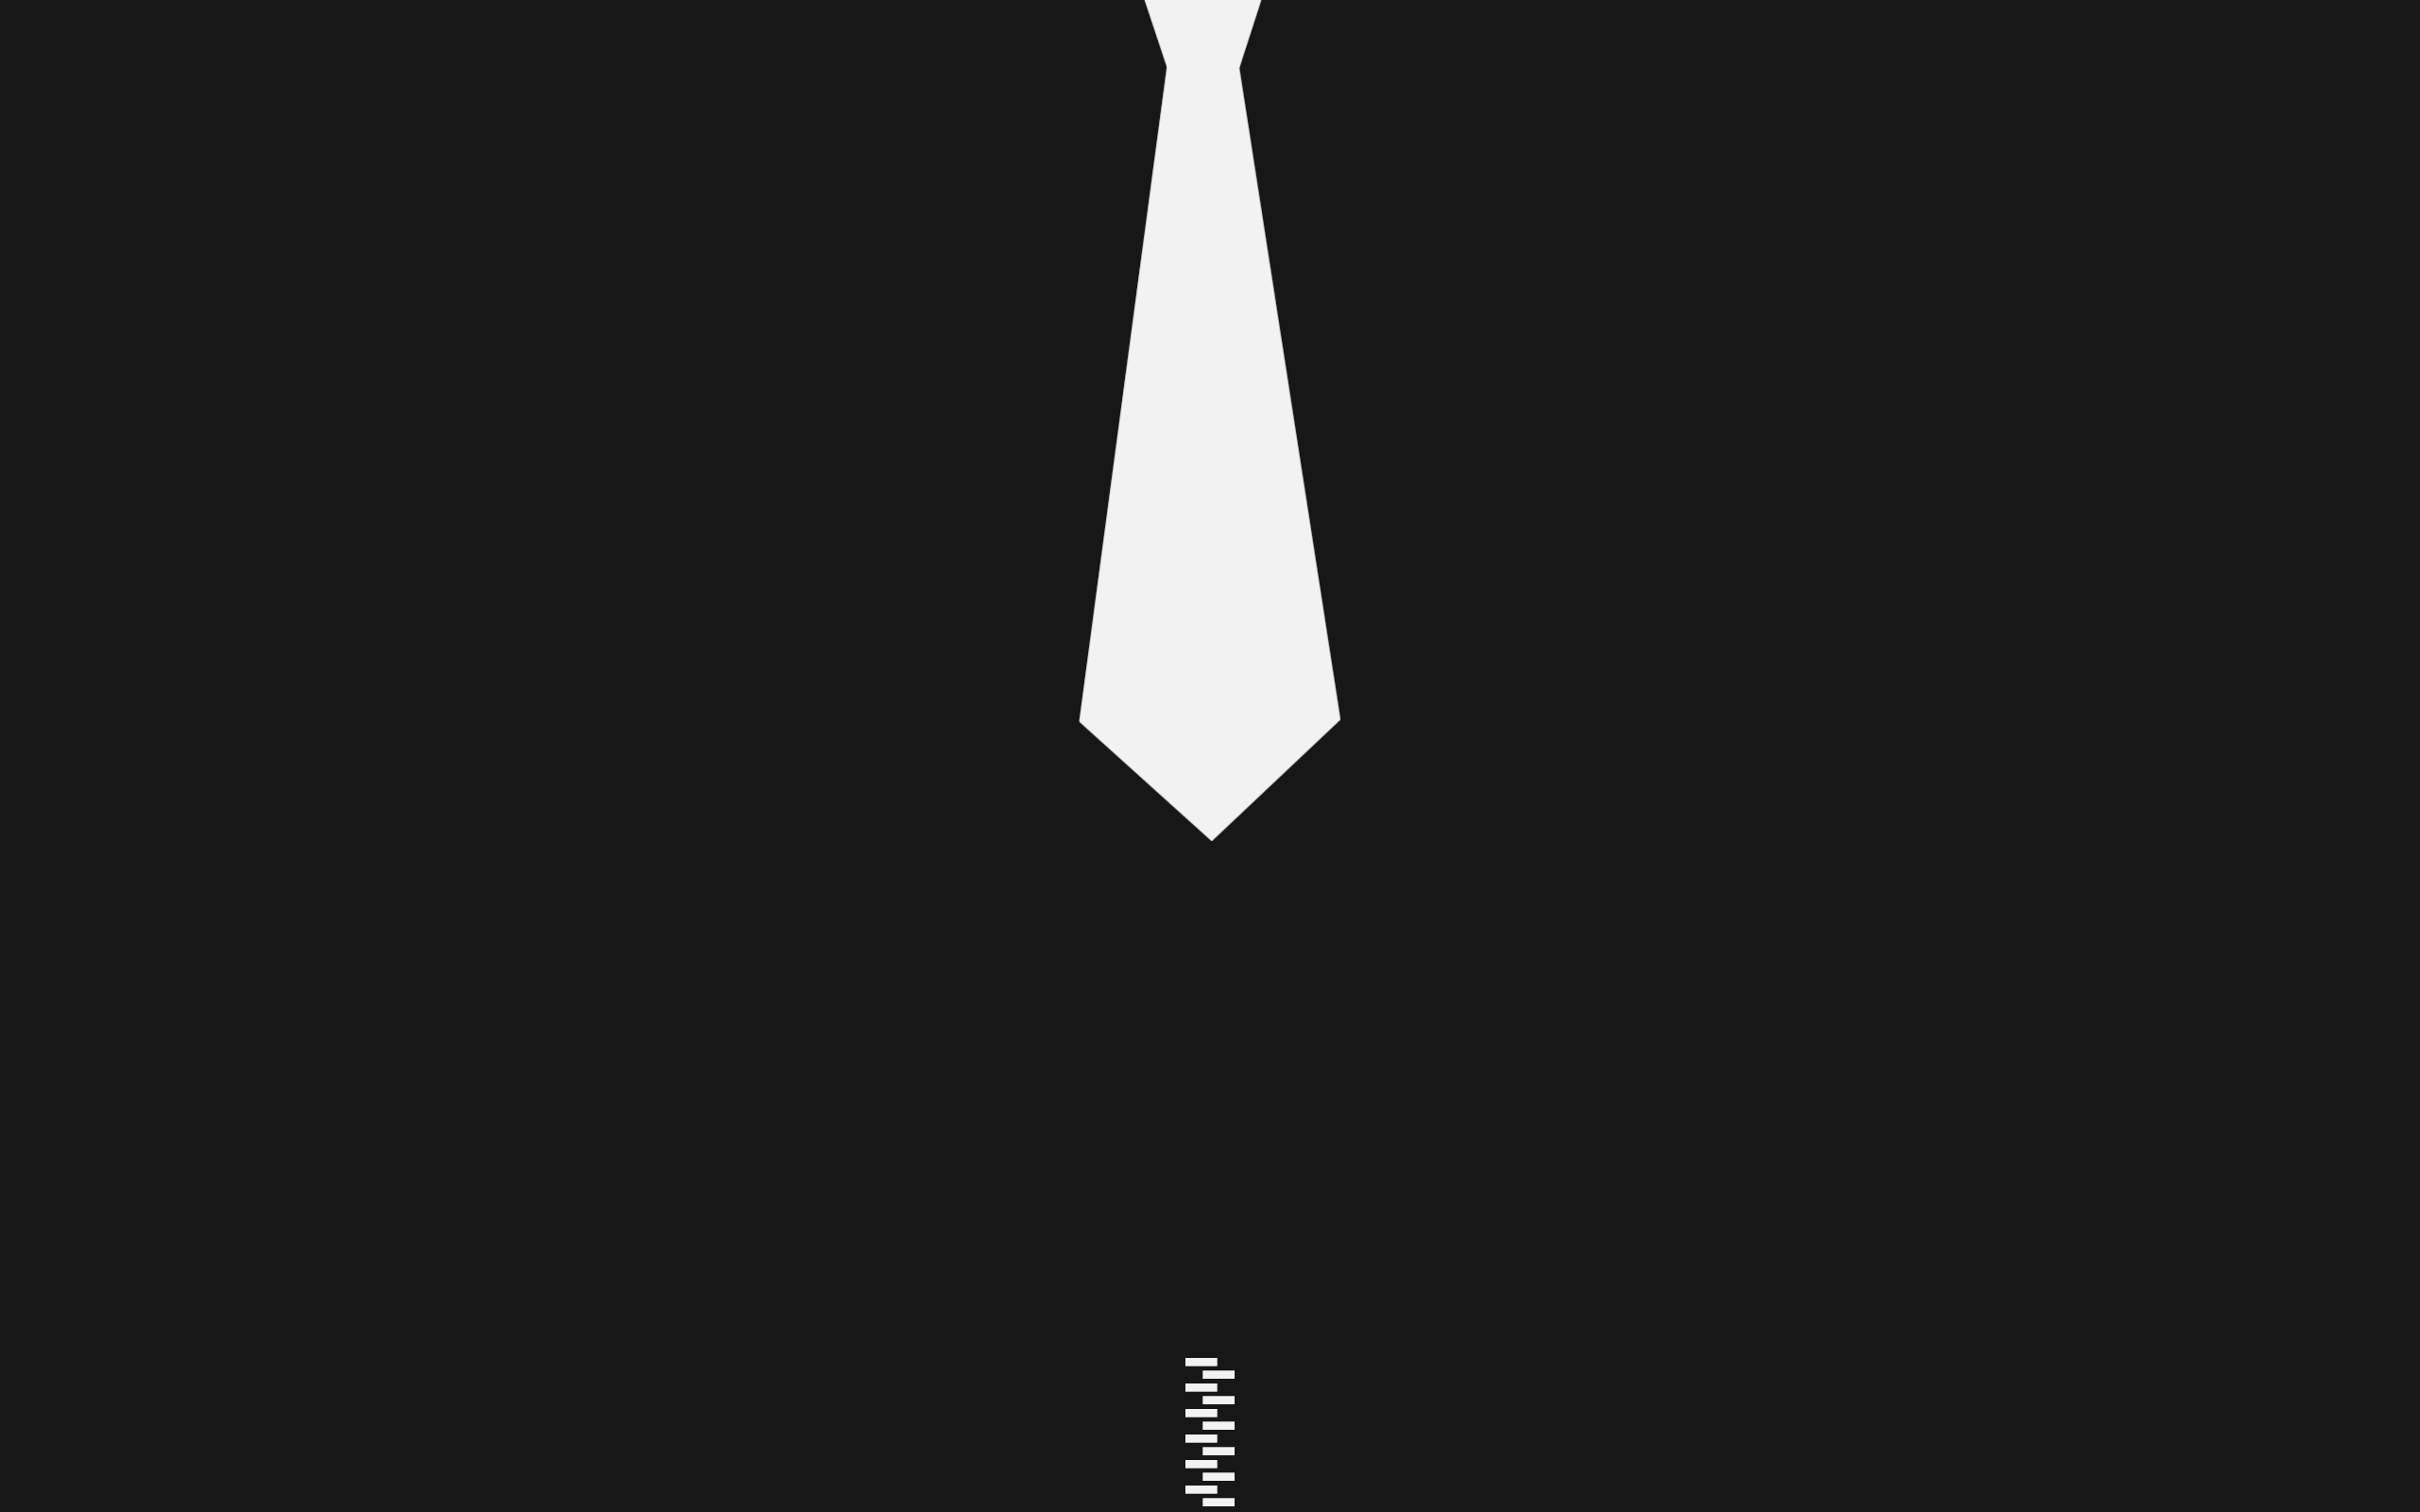 minimalistic tie elegant wallpaper black background hd free download